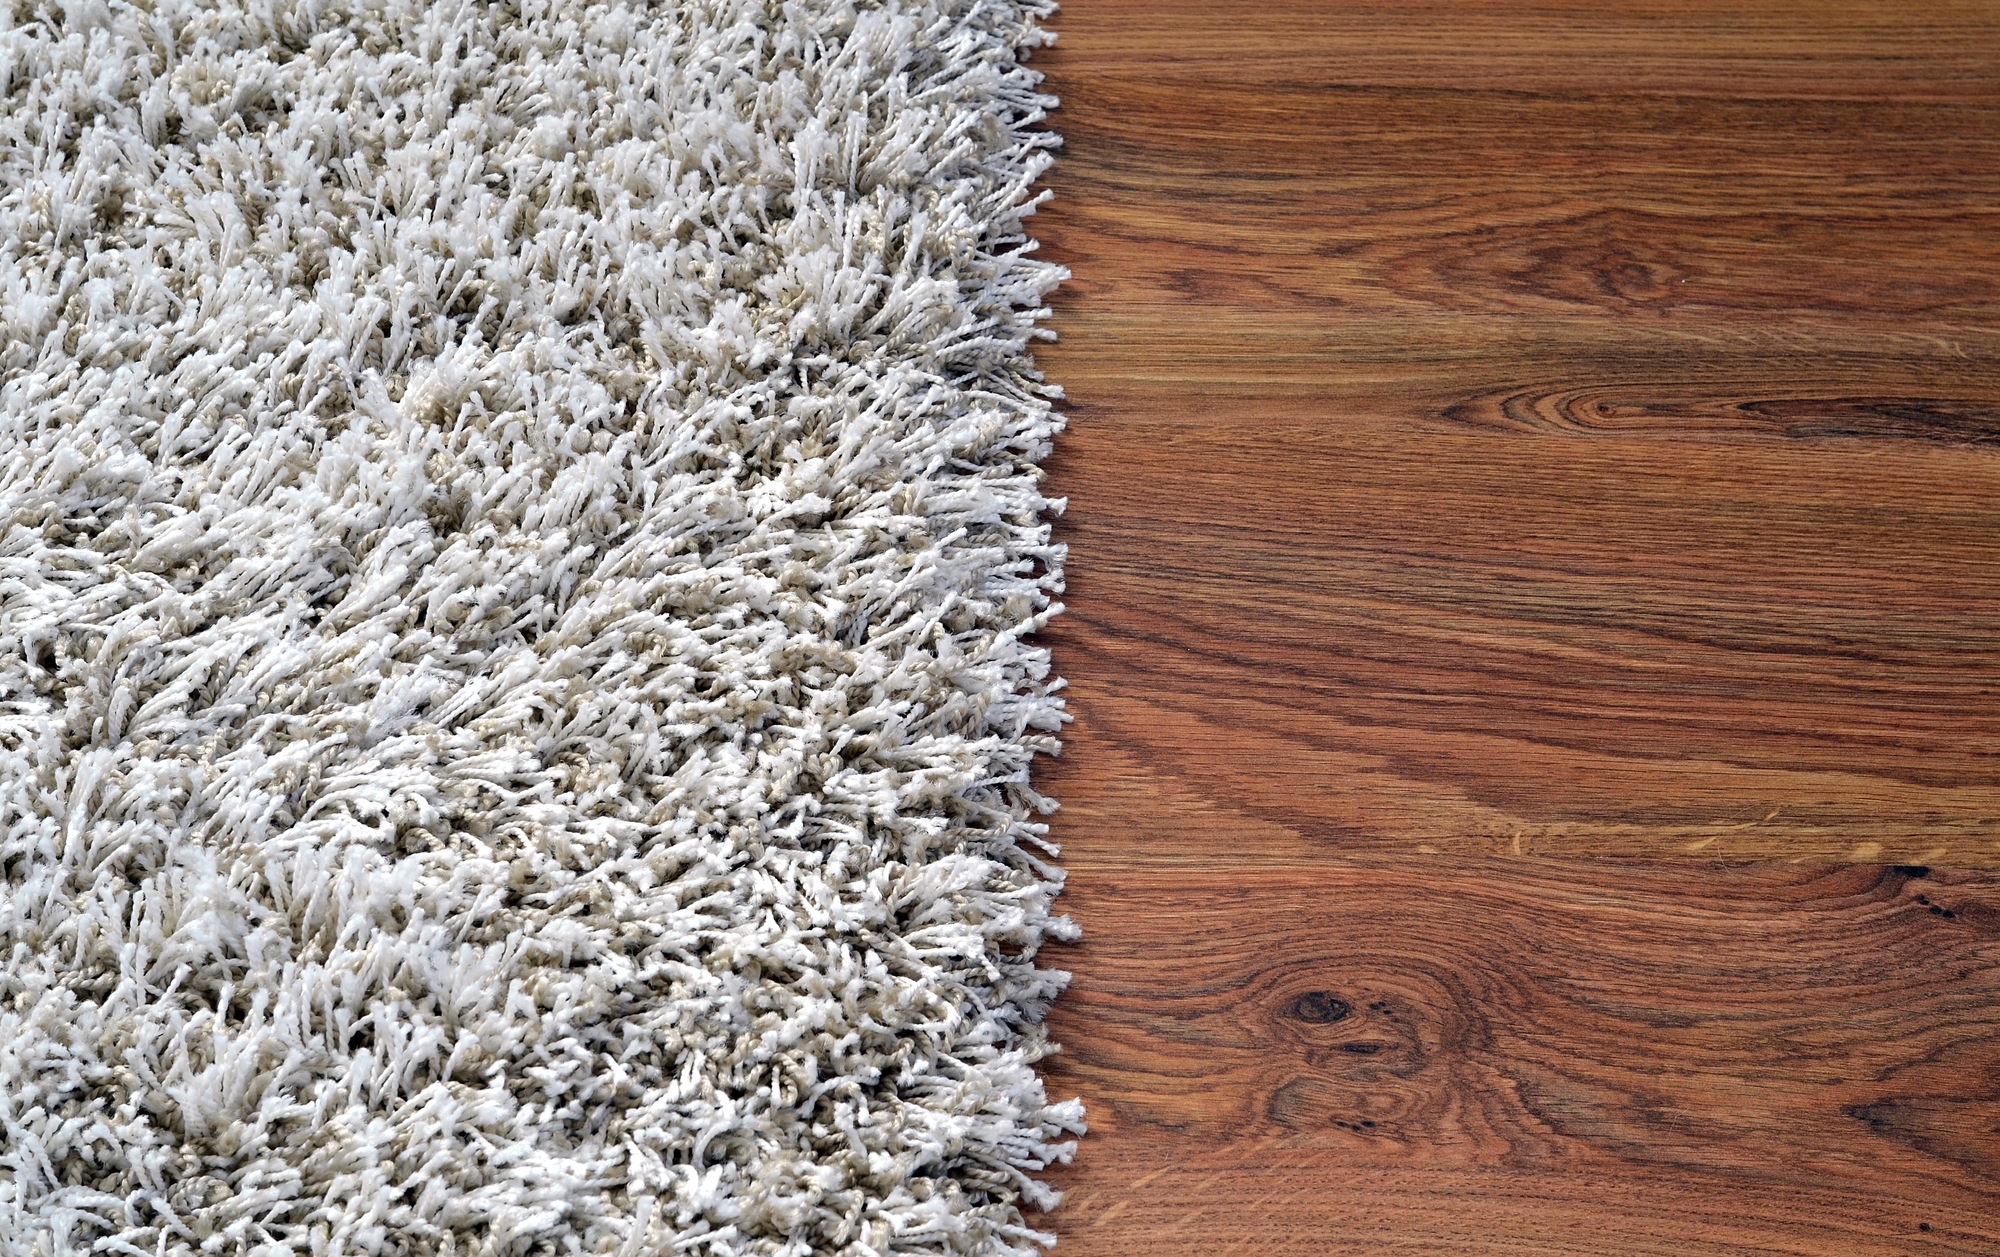 Keywords: rug, wooden floor.